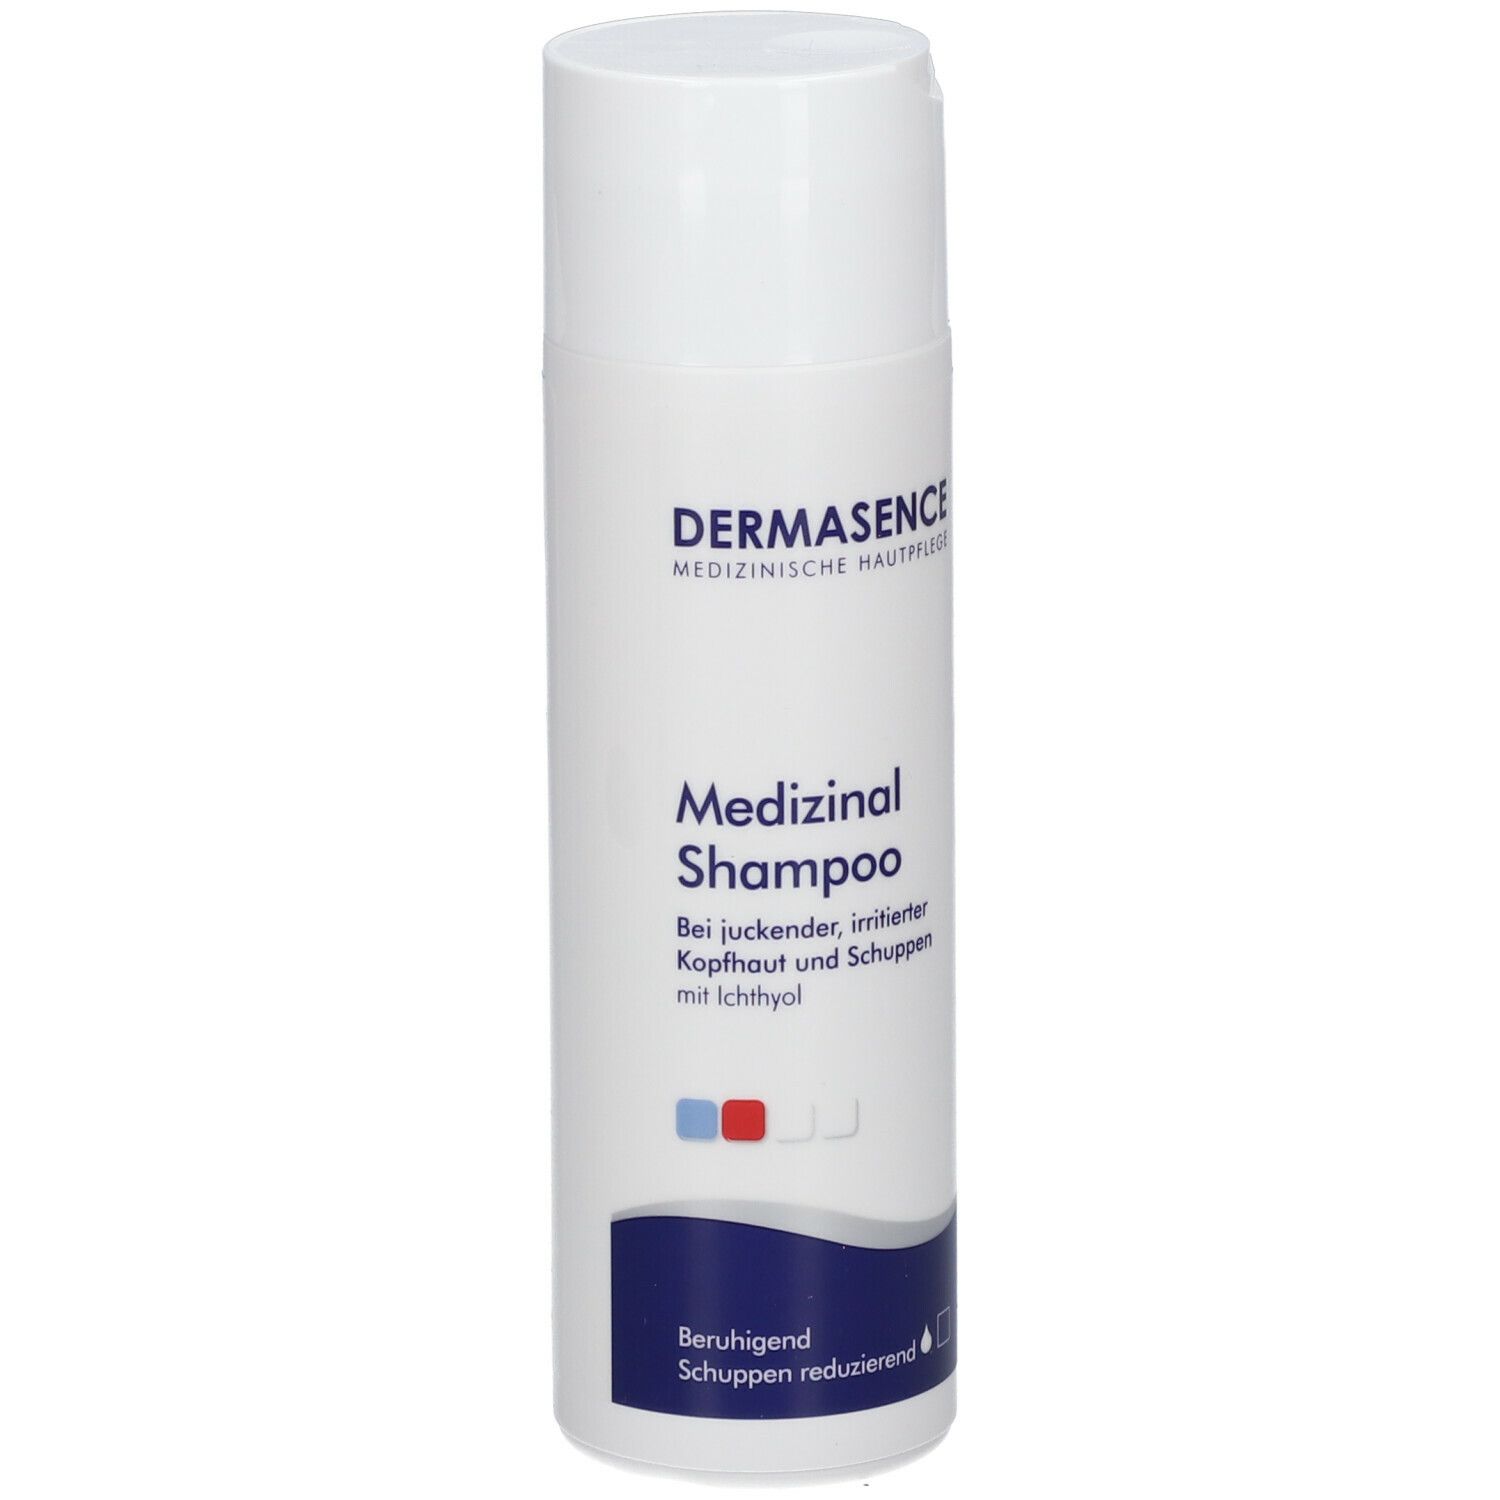 DERMASENCE Medizinal Shampoo